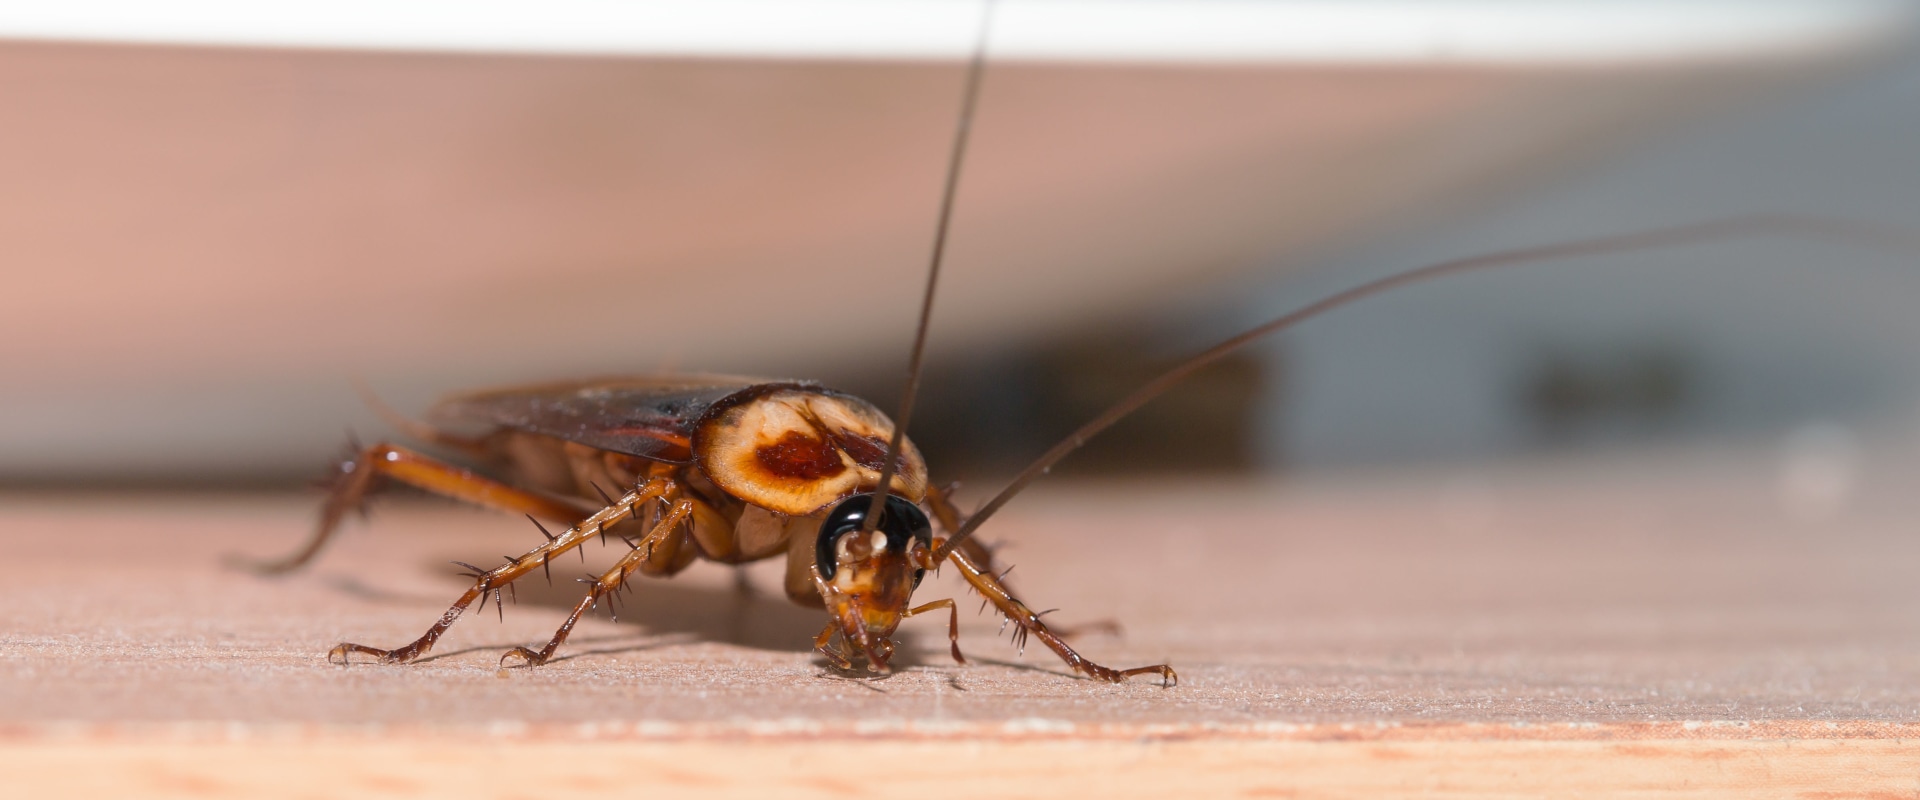 Is diy pest control safe?